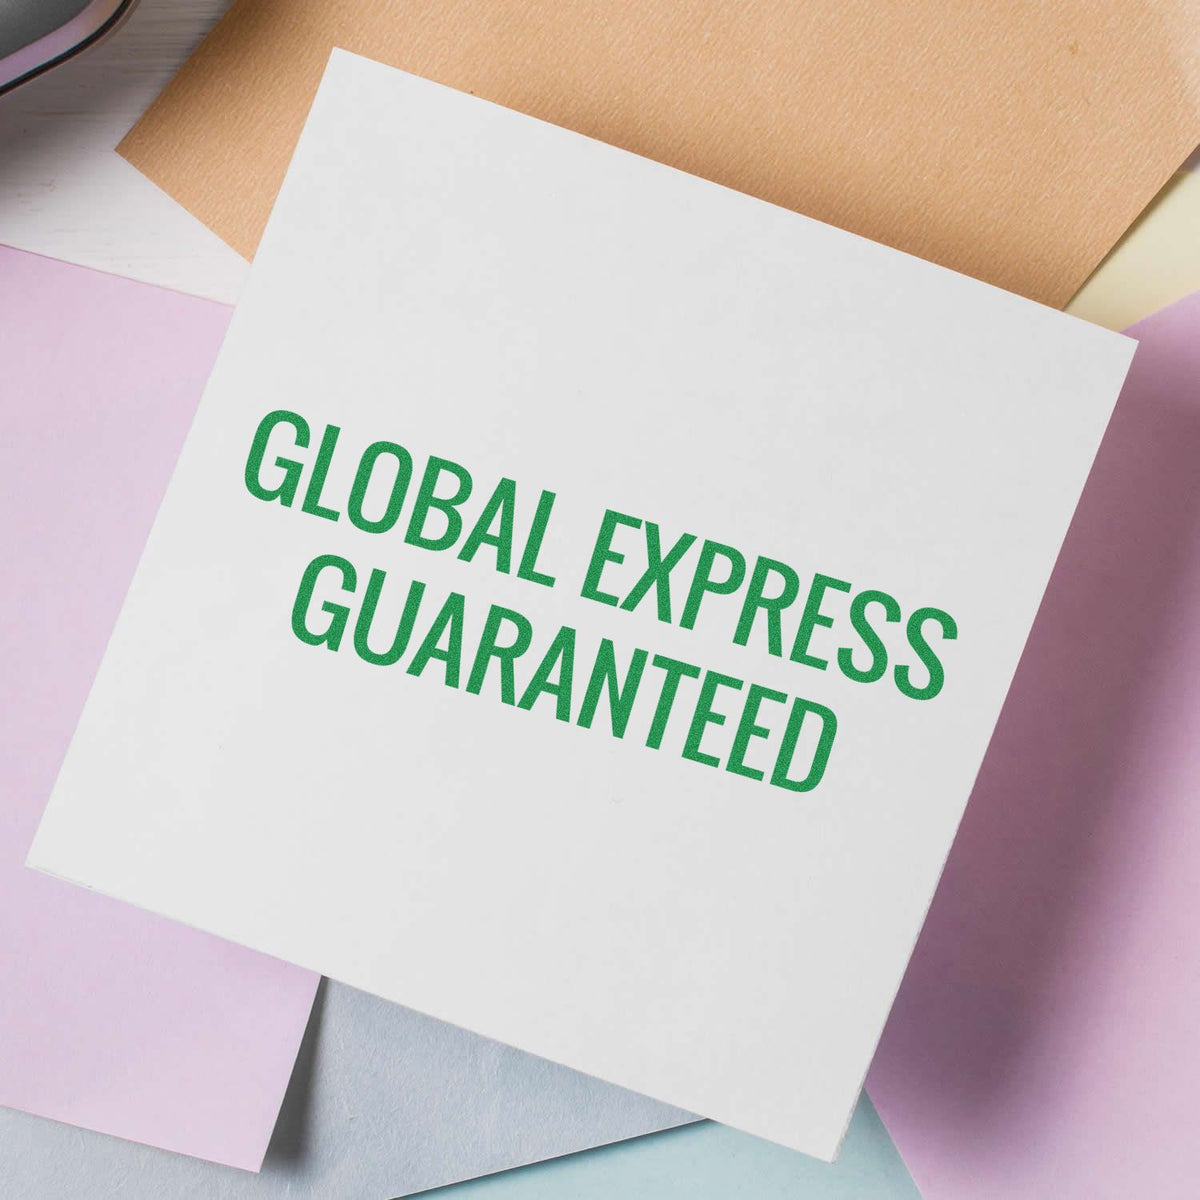 Slim Pre-Inked Global Express Guaranteed Stamp In Use